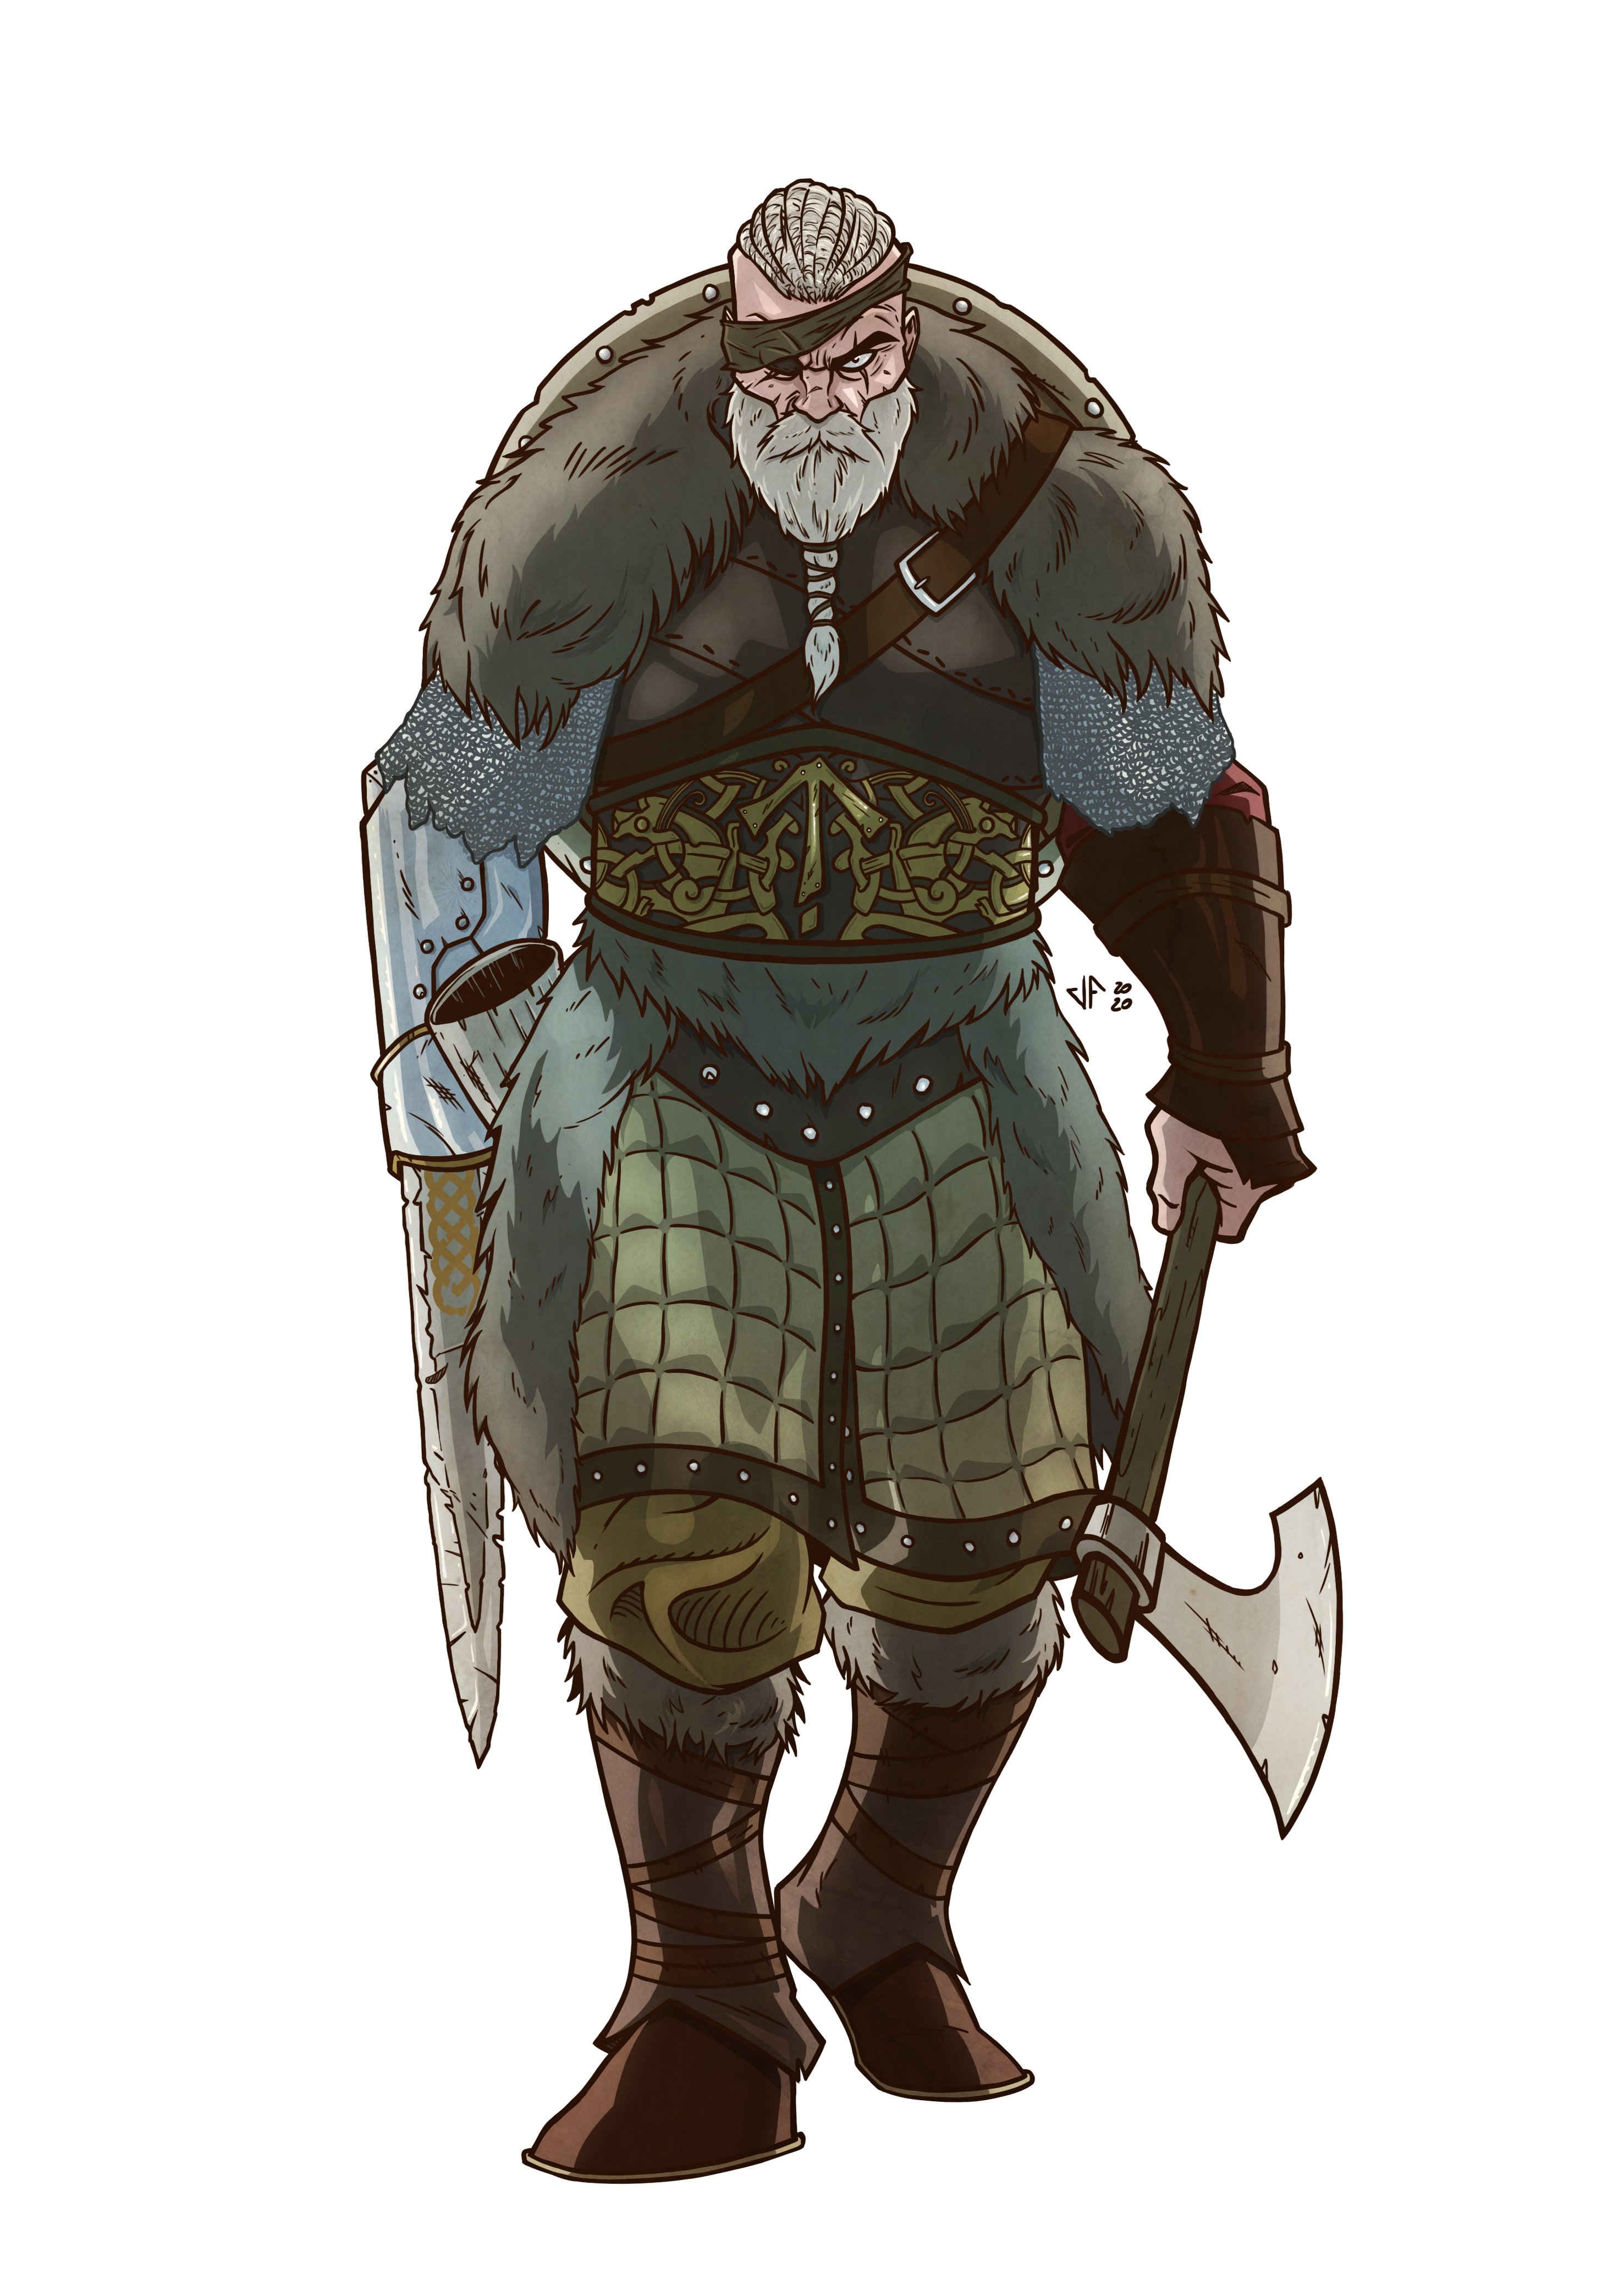 Tyr, God of War by Kendal14 on DeviantArt